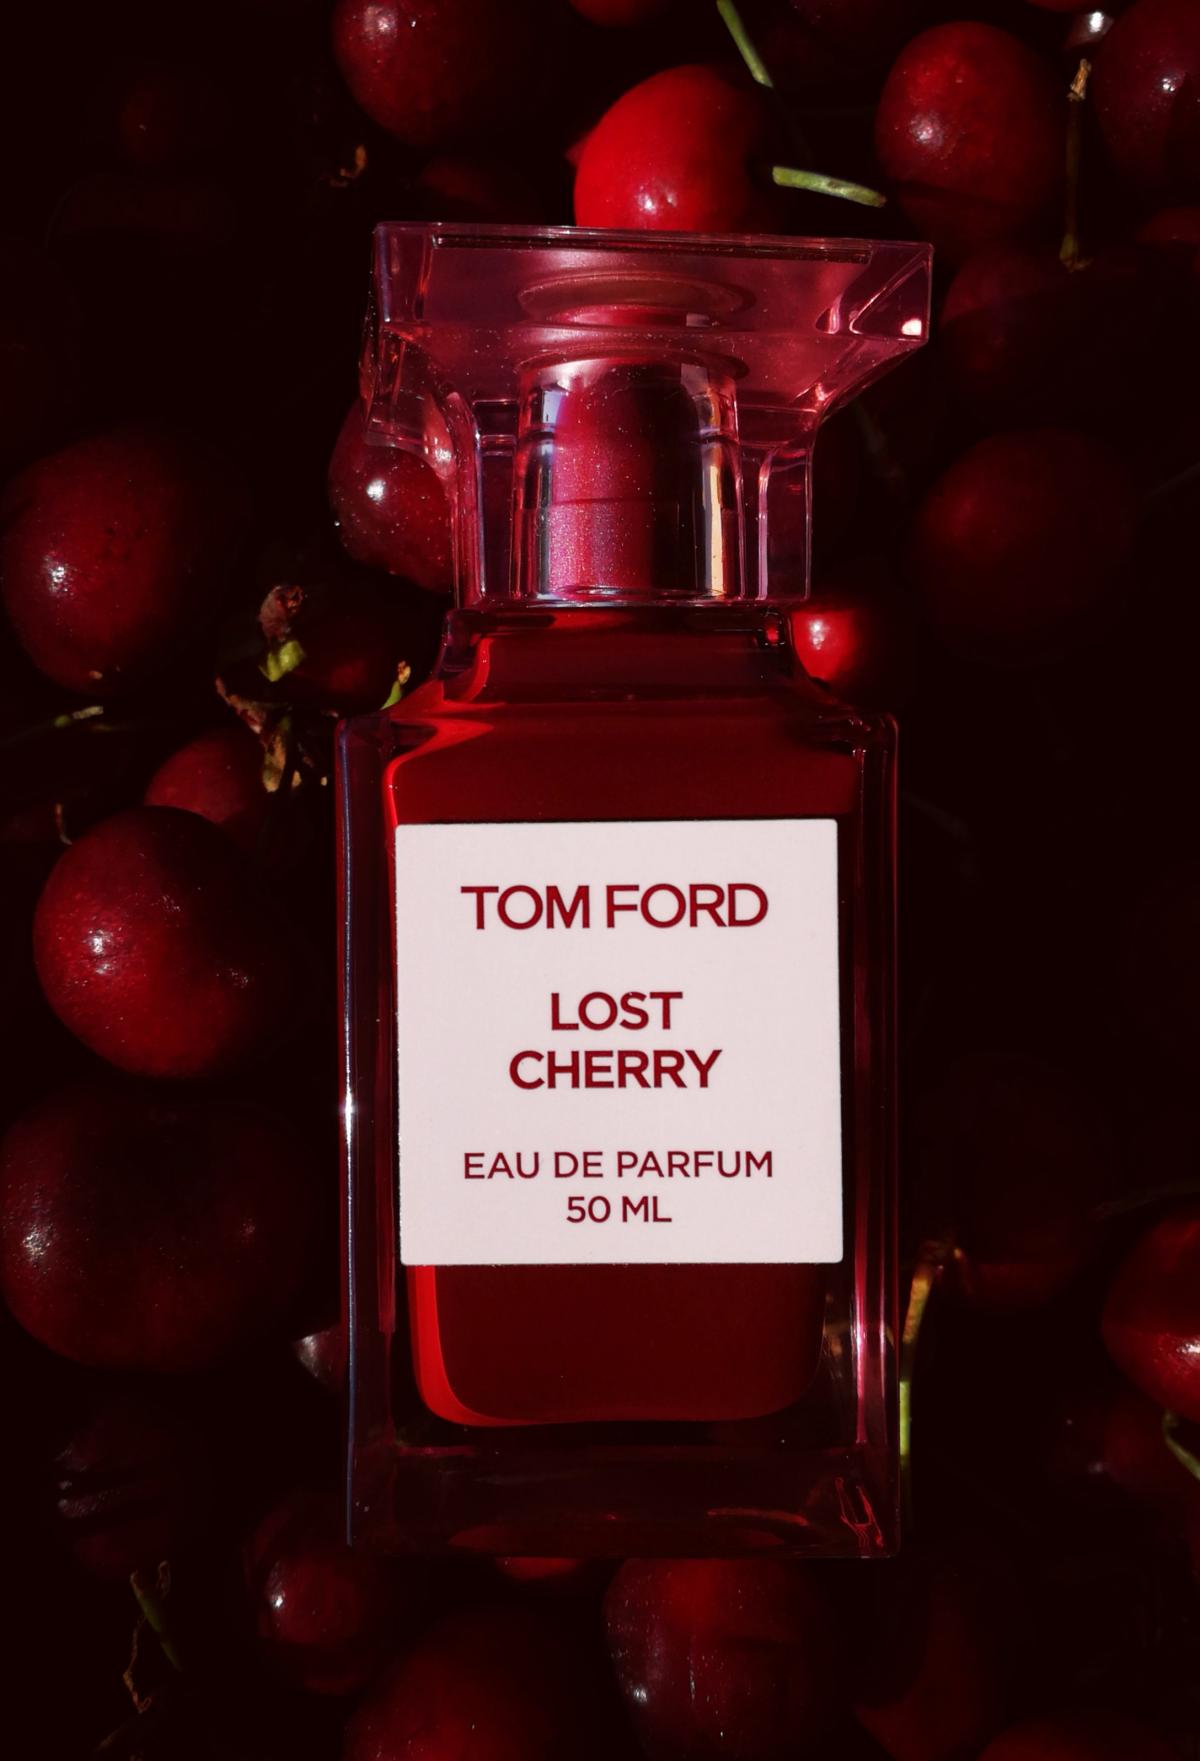 Tom ford lost cherry фото